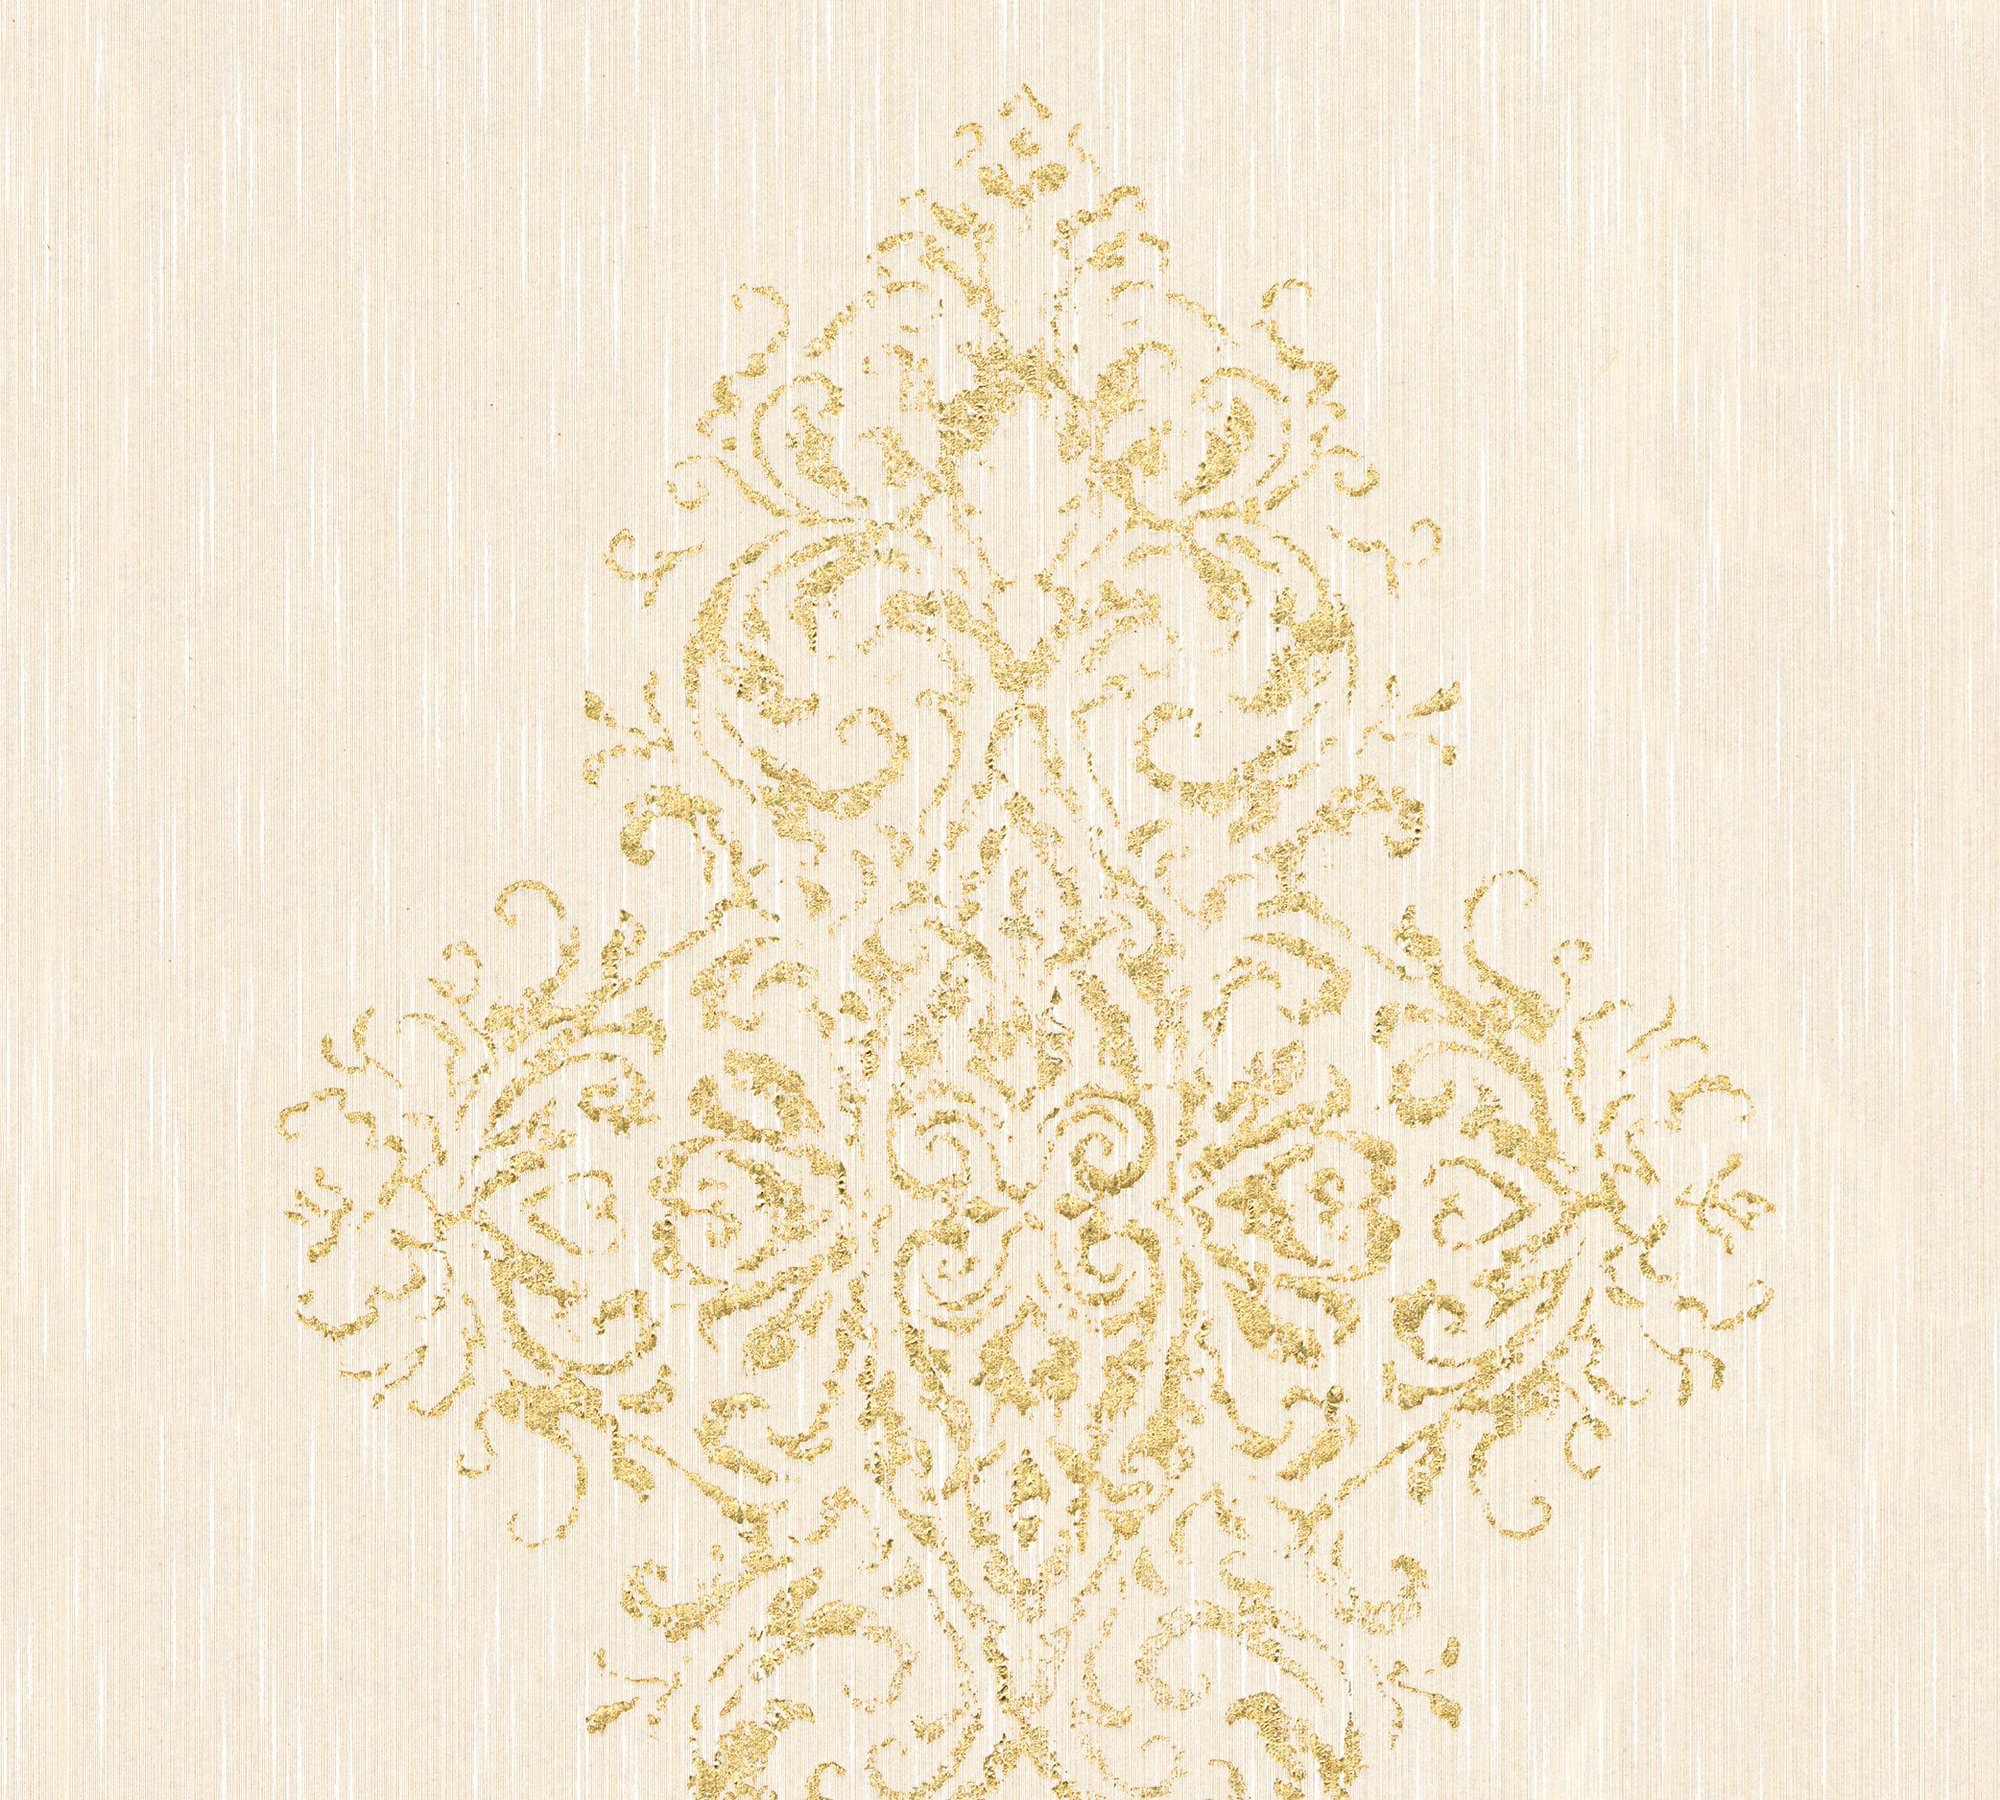 Metallic Textiltapete A.S. Effekt samtig, Luxury Paper Barock, creme/gold Architects wallpaper, Barock Tapete Création Textil